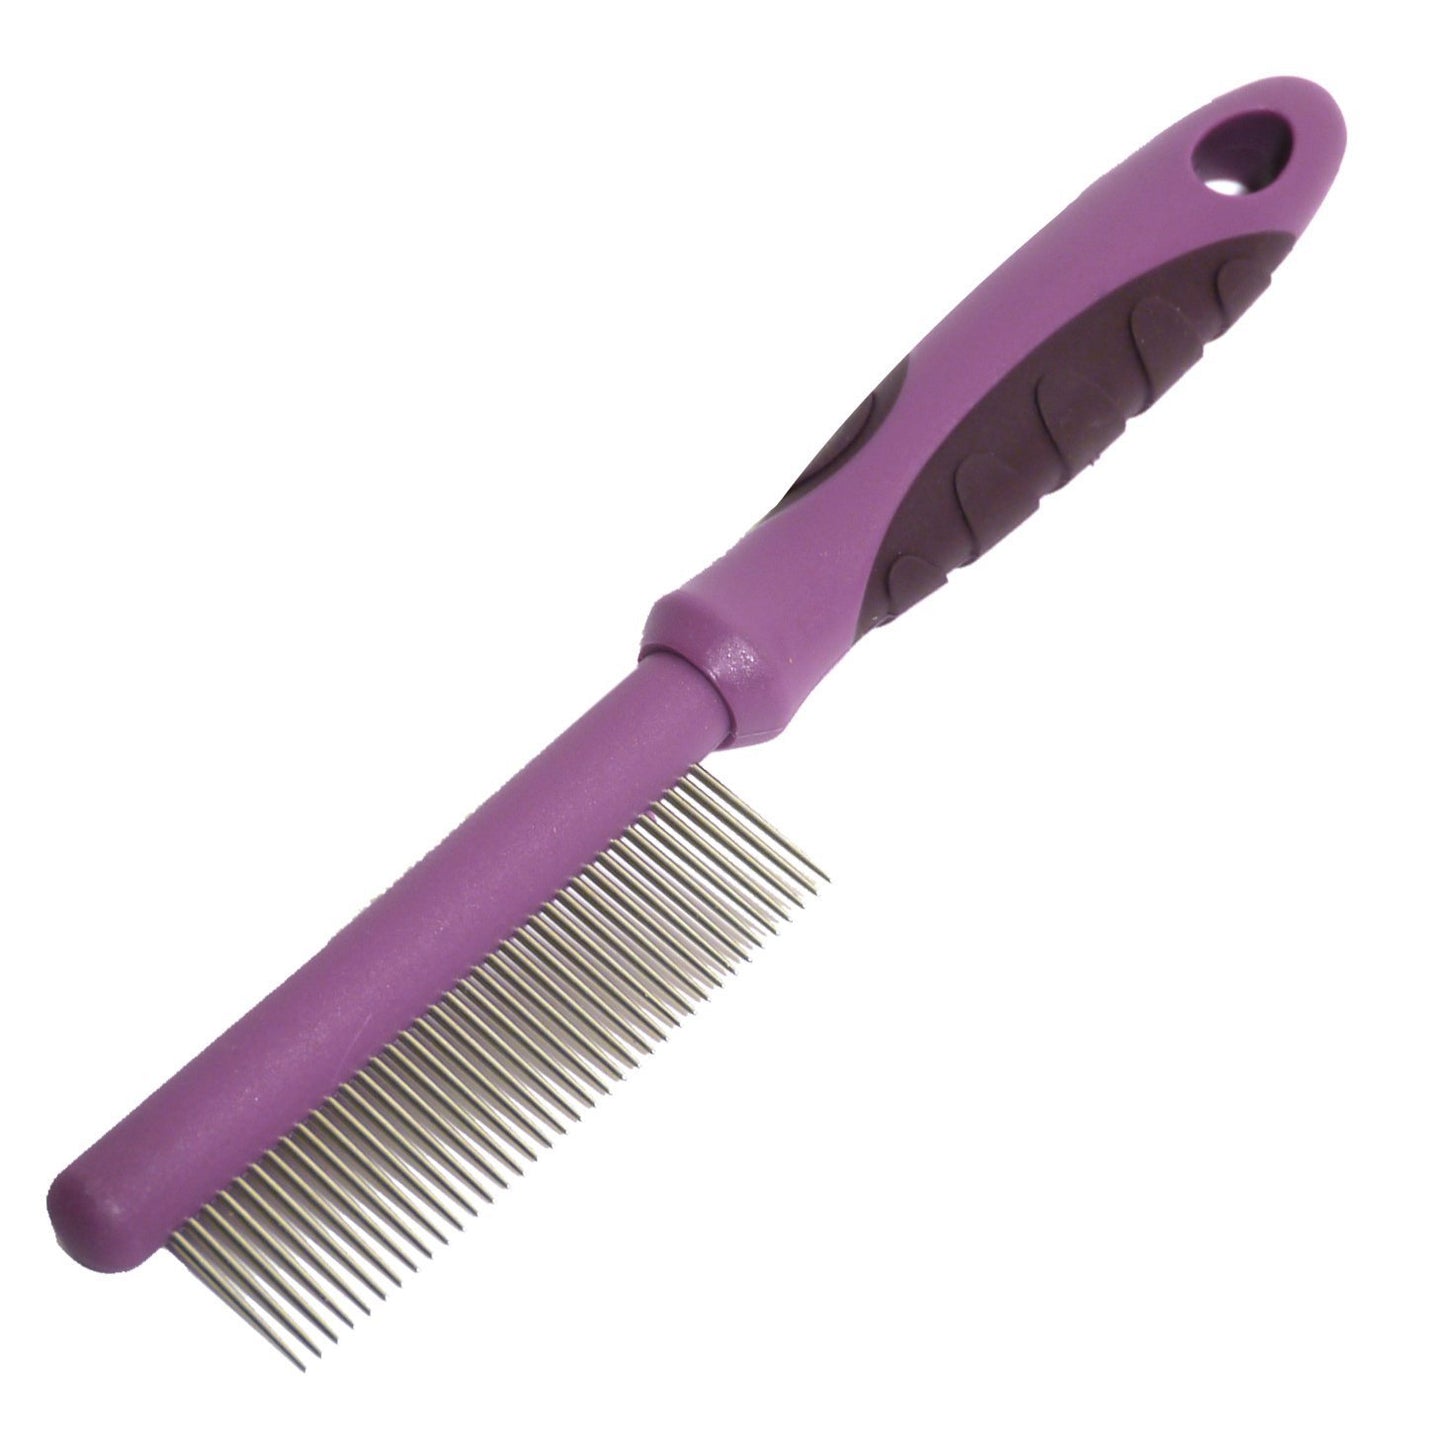 Rosewood Salon Grooming Combs - Combs